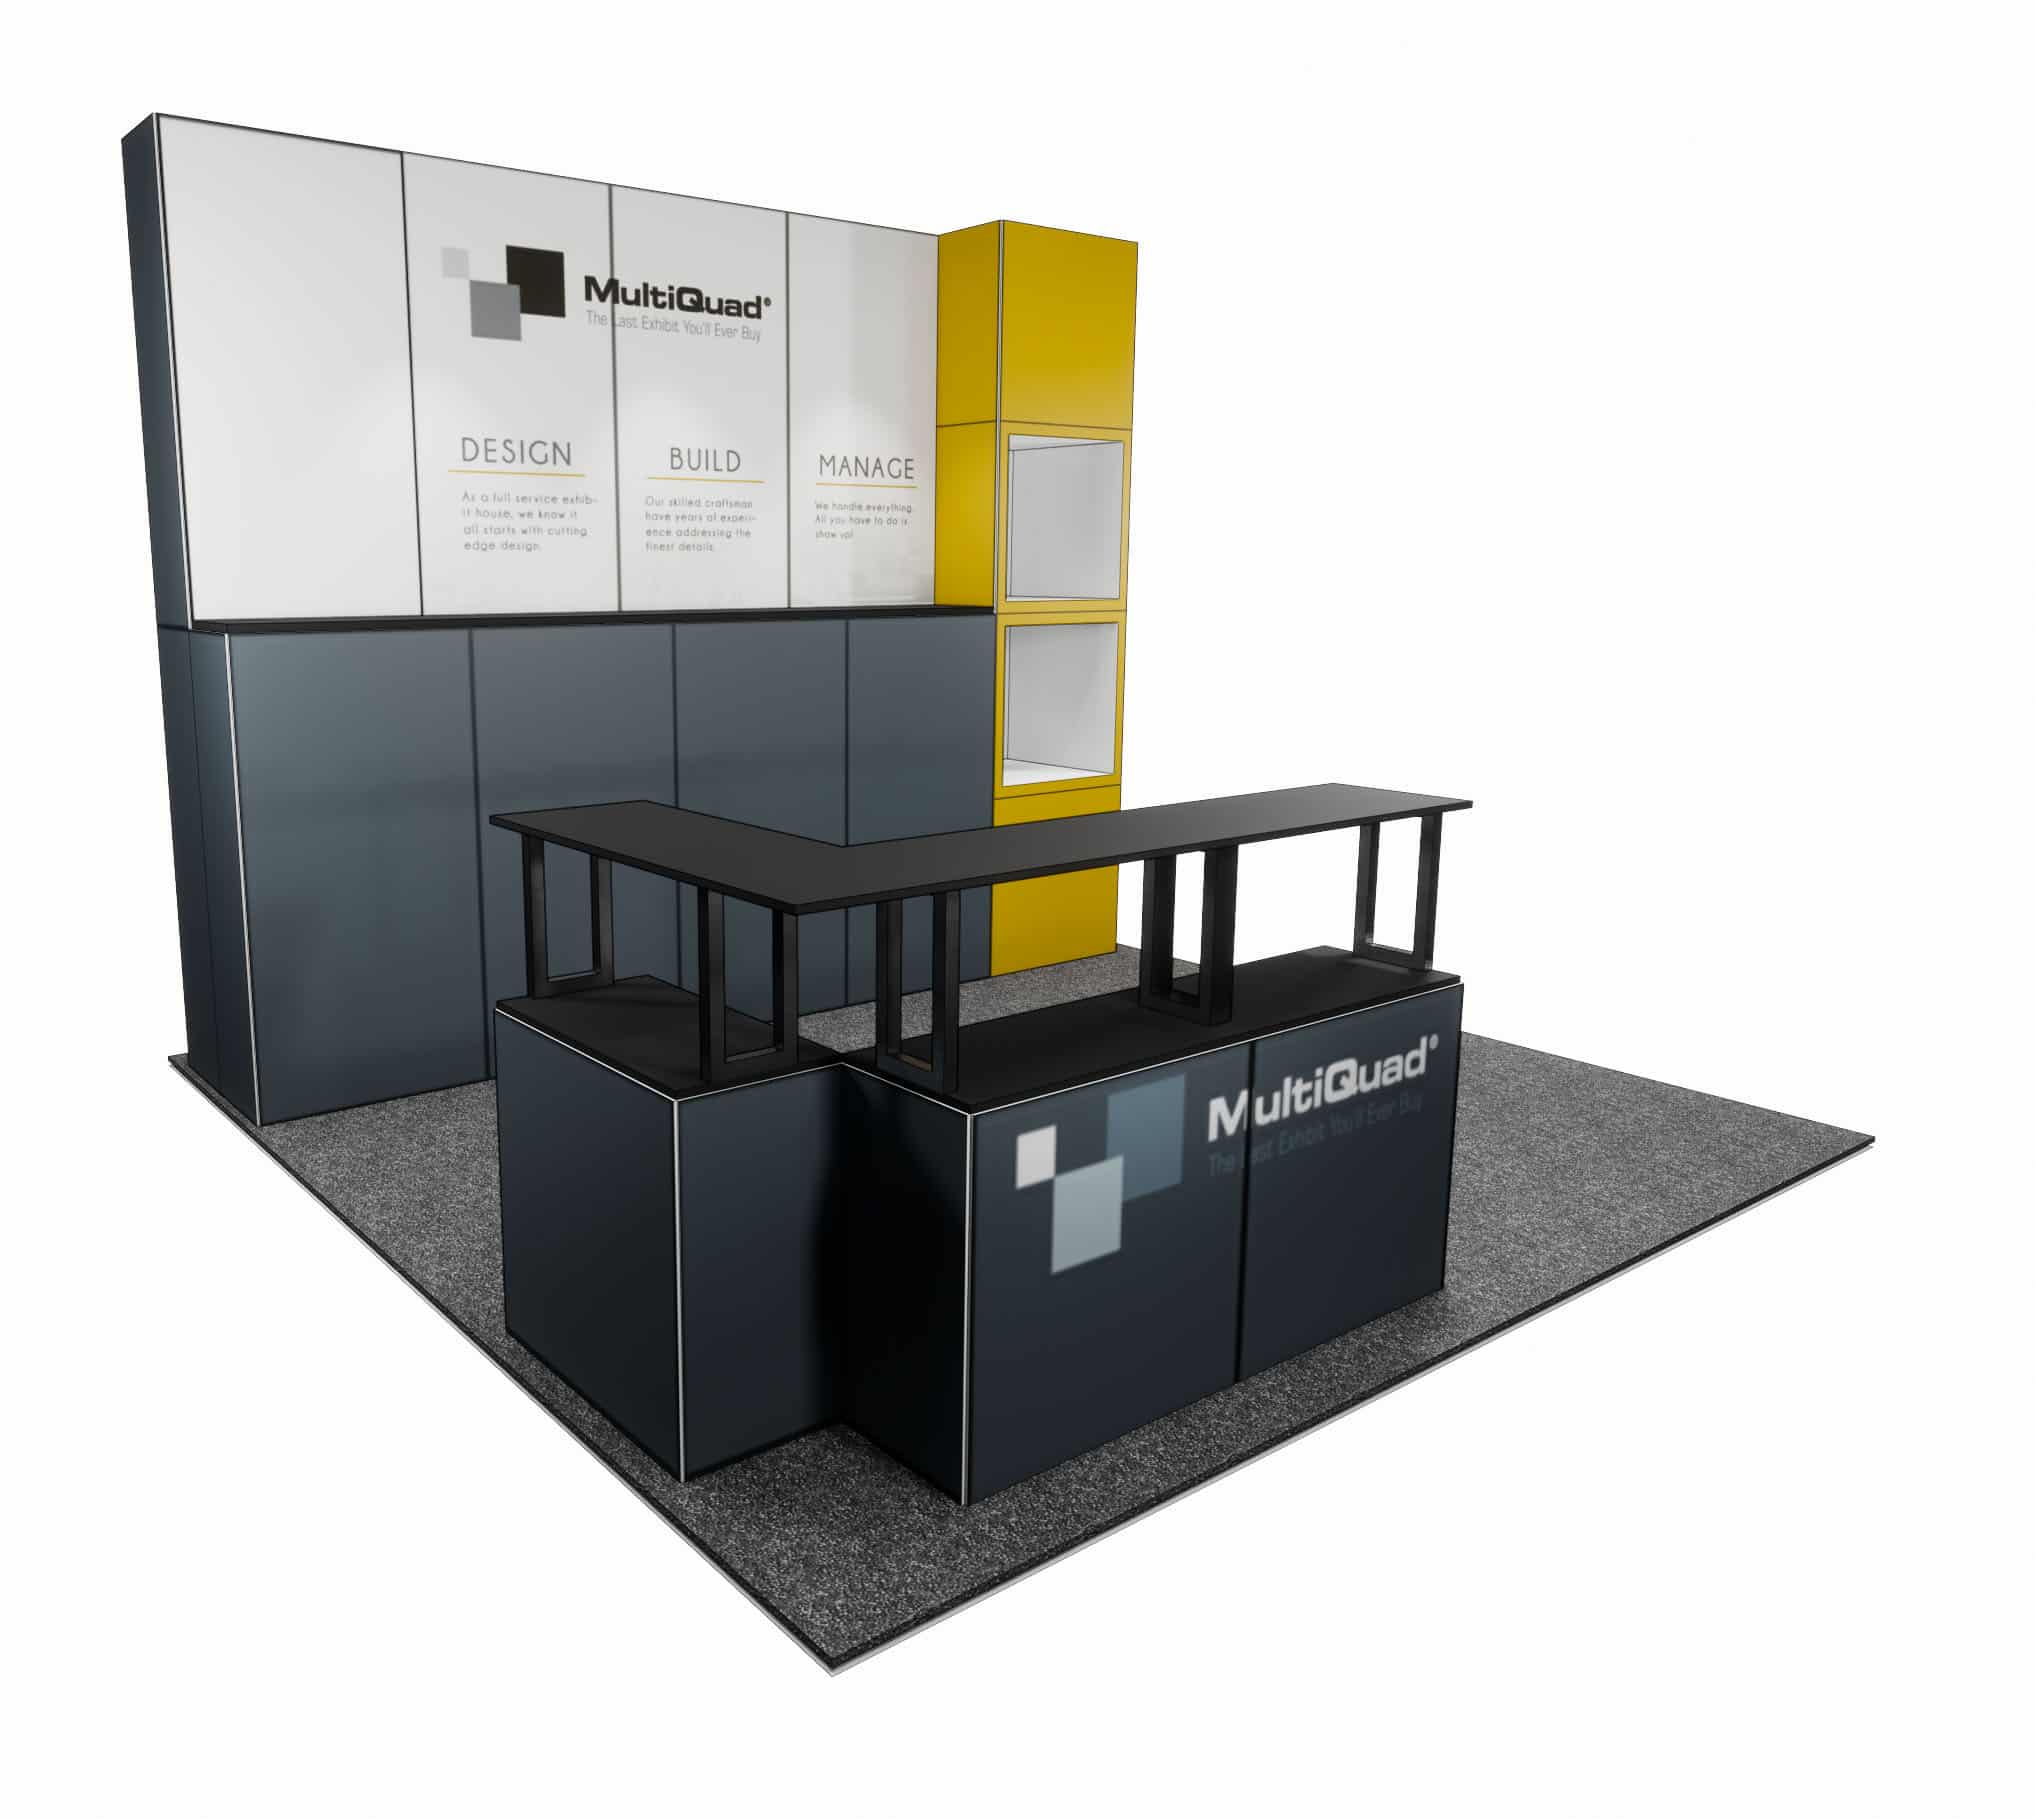 10x10 Modular booth with showcase display